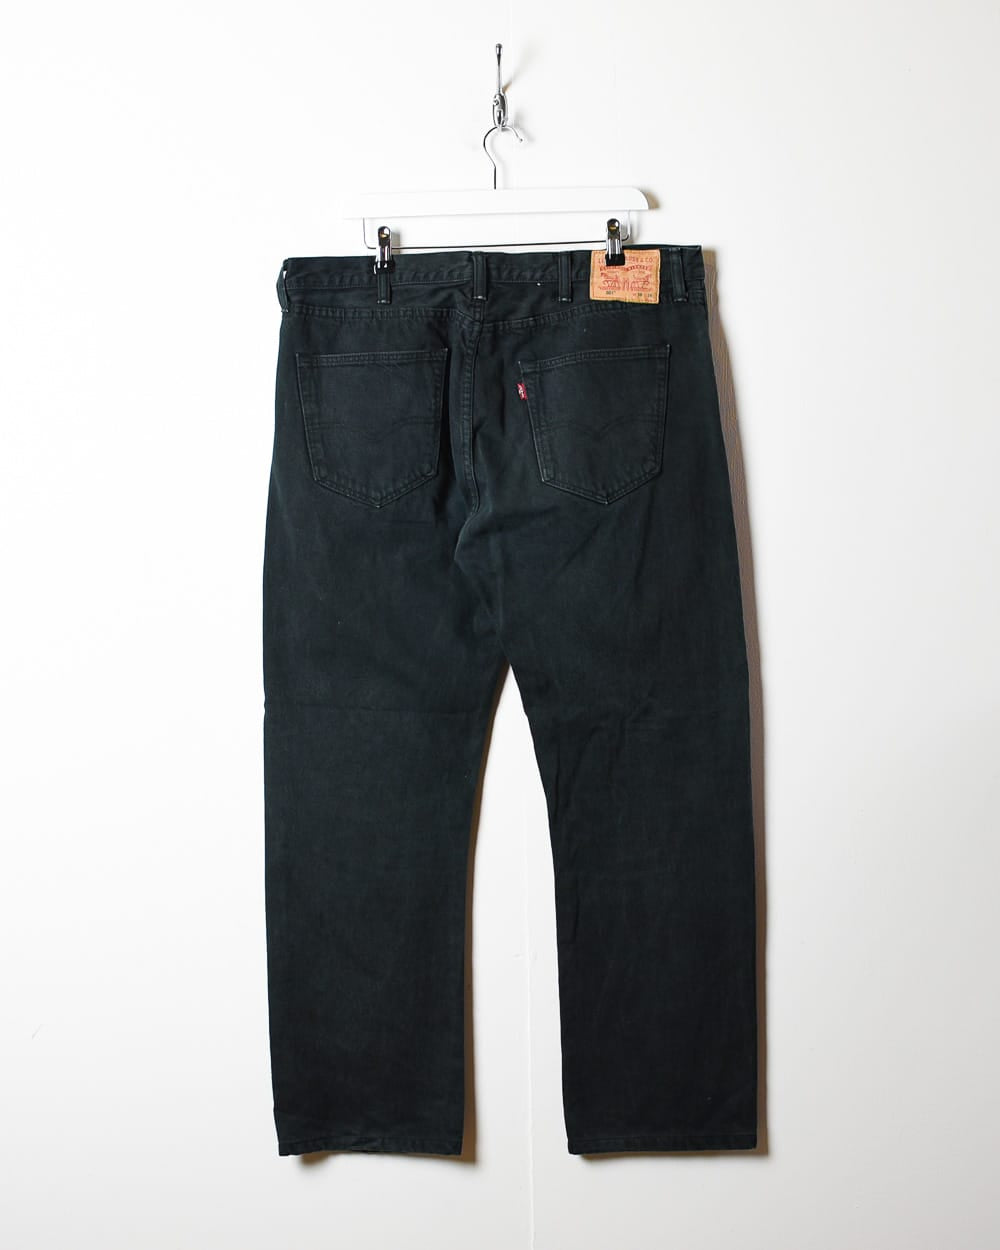 Black Levi's 501 Jeans - W38 L30